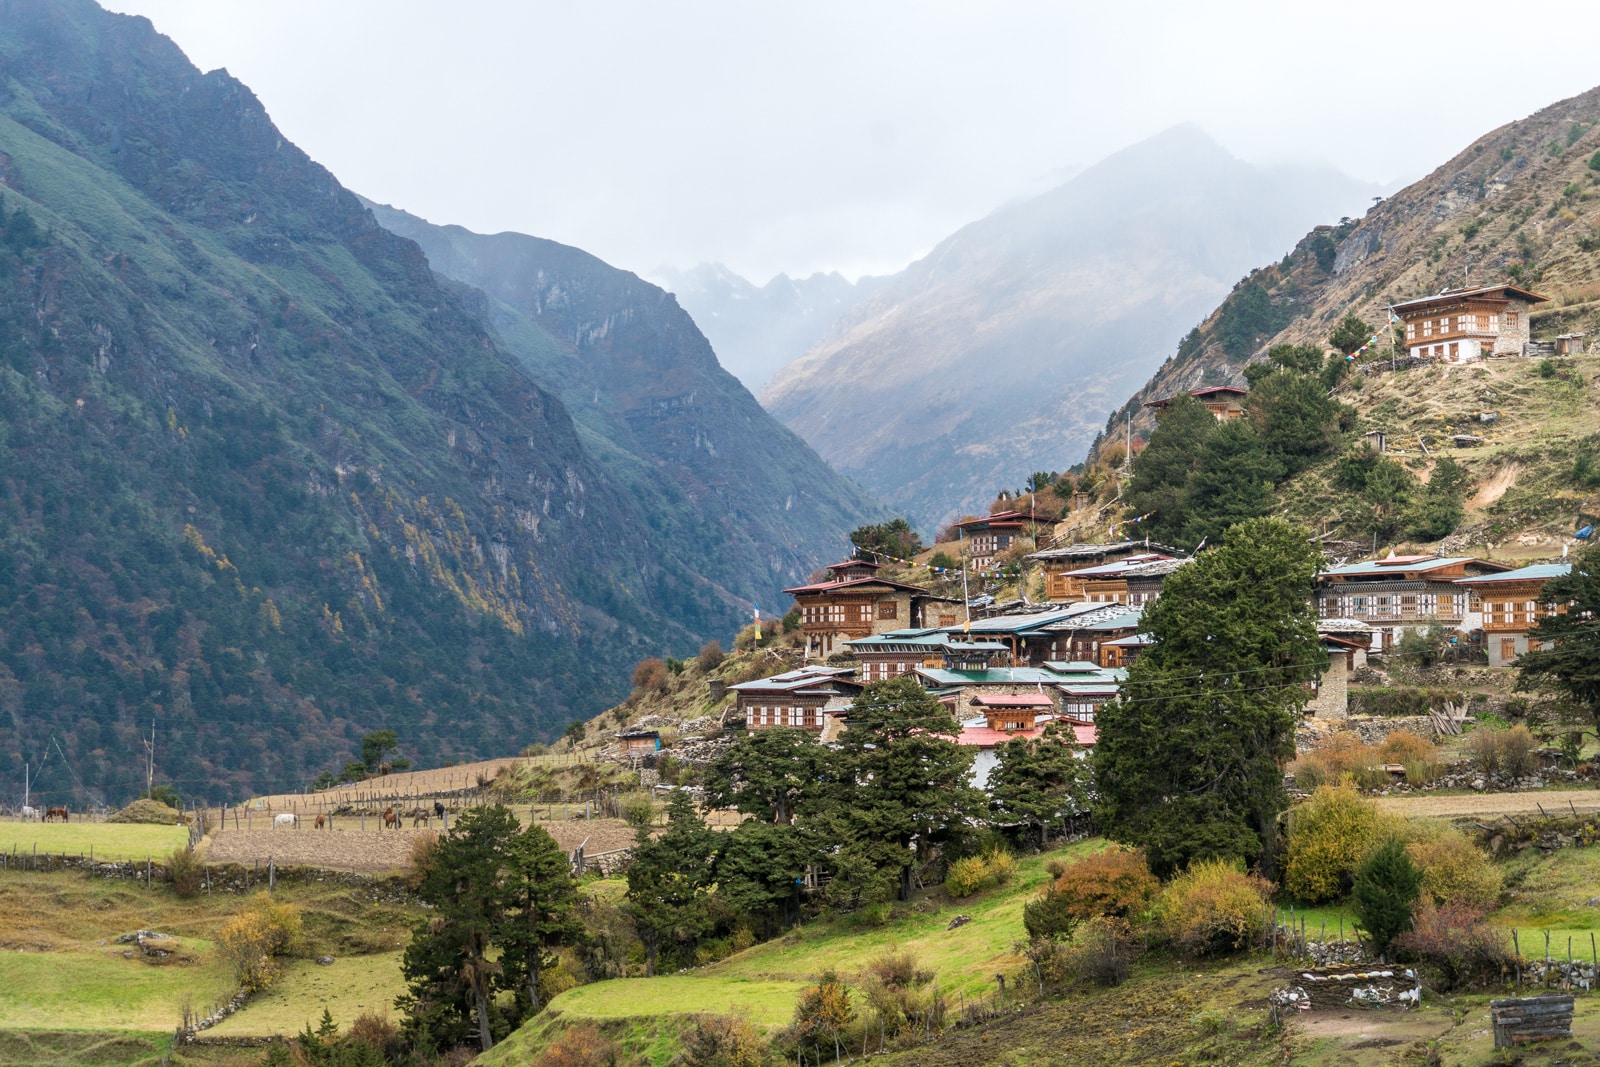 Photos of the Royal Highlander Festival in Bhutan - Laya village - Lost With Purpose travel blog